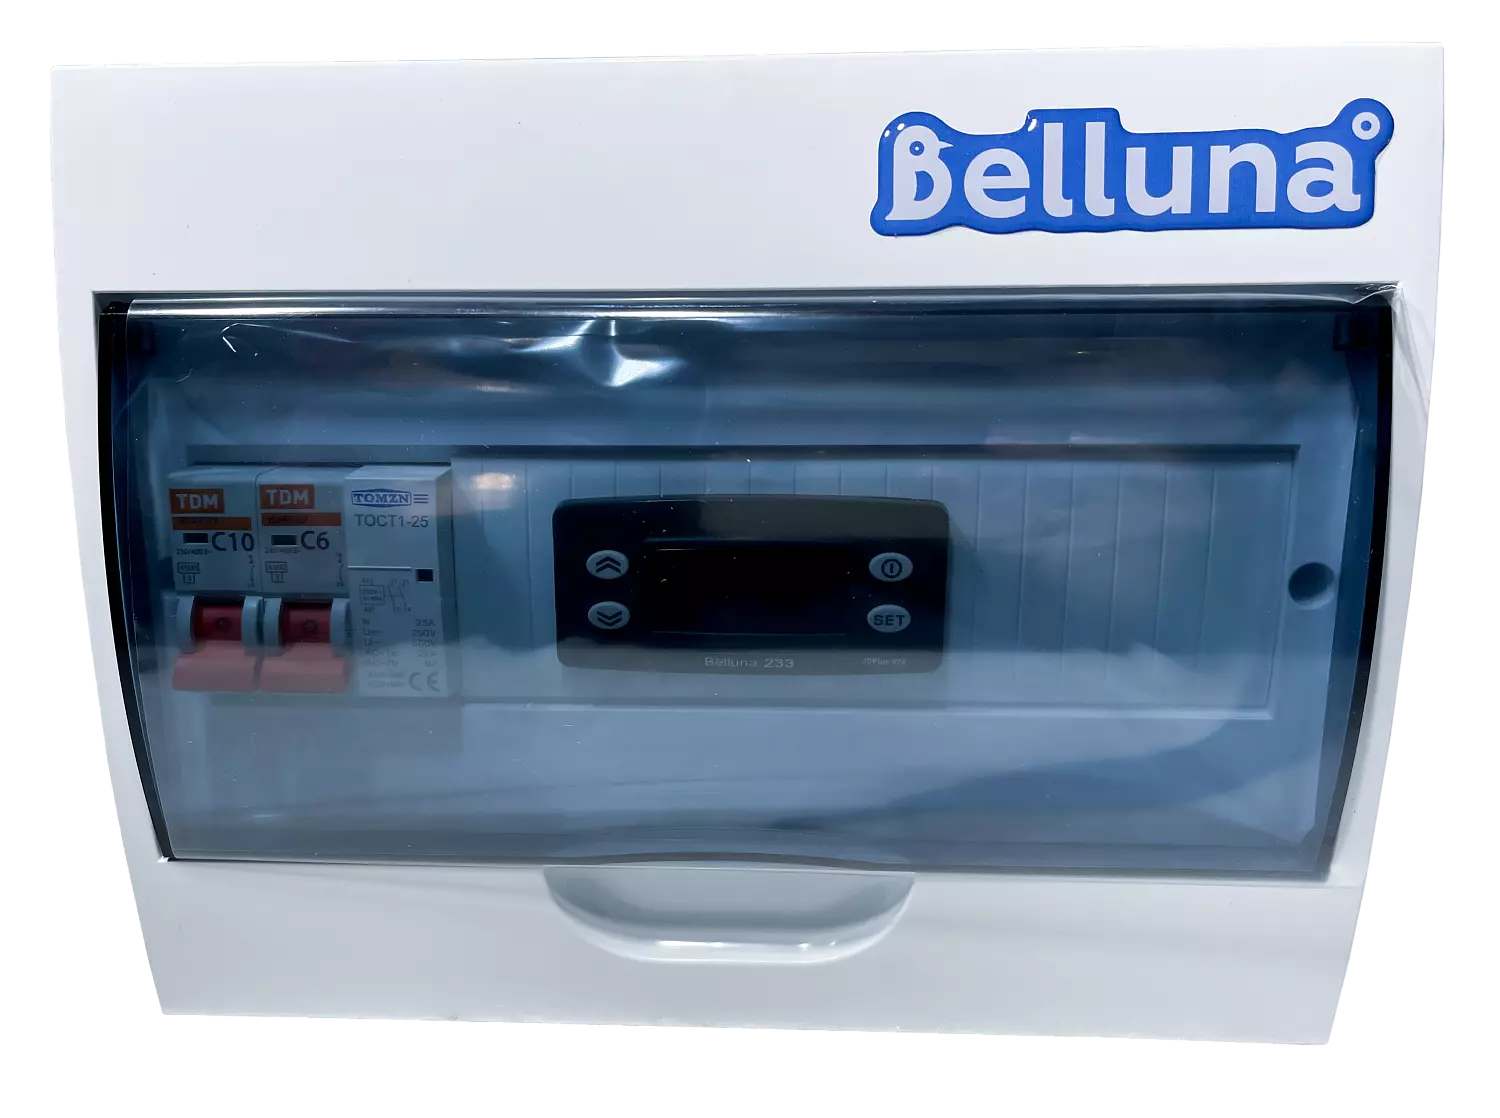 сплит-система Belluna S115 W Вино Казань